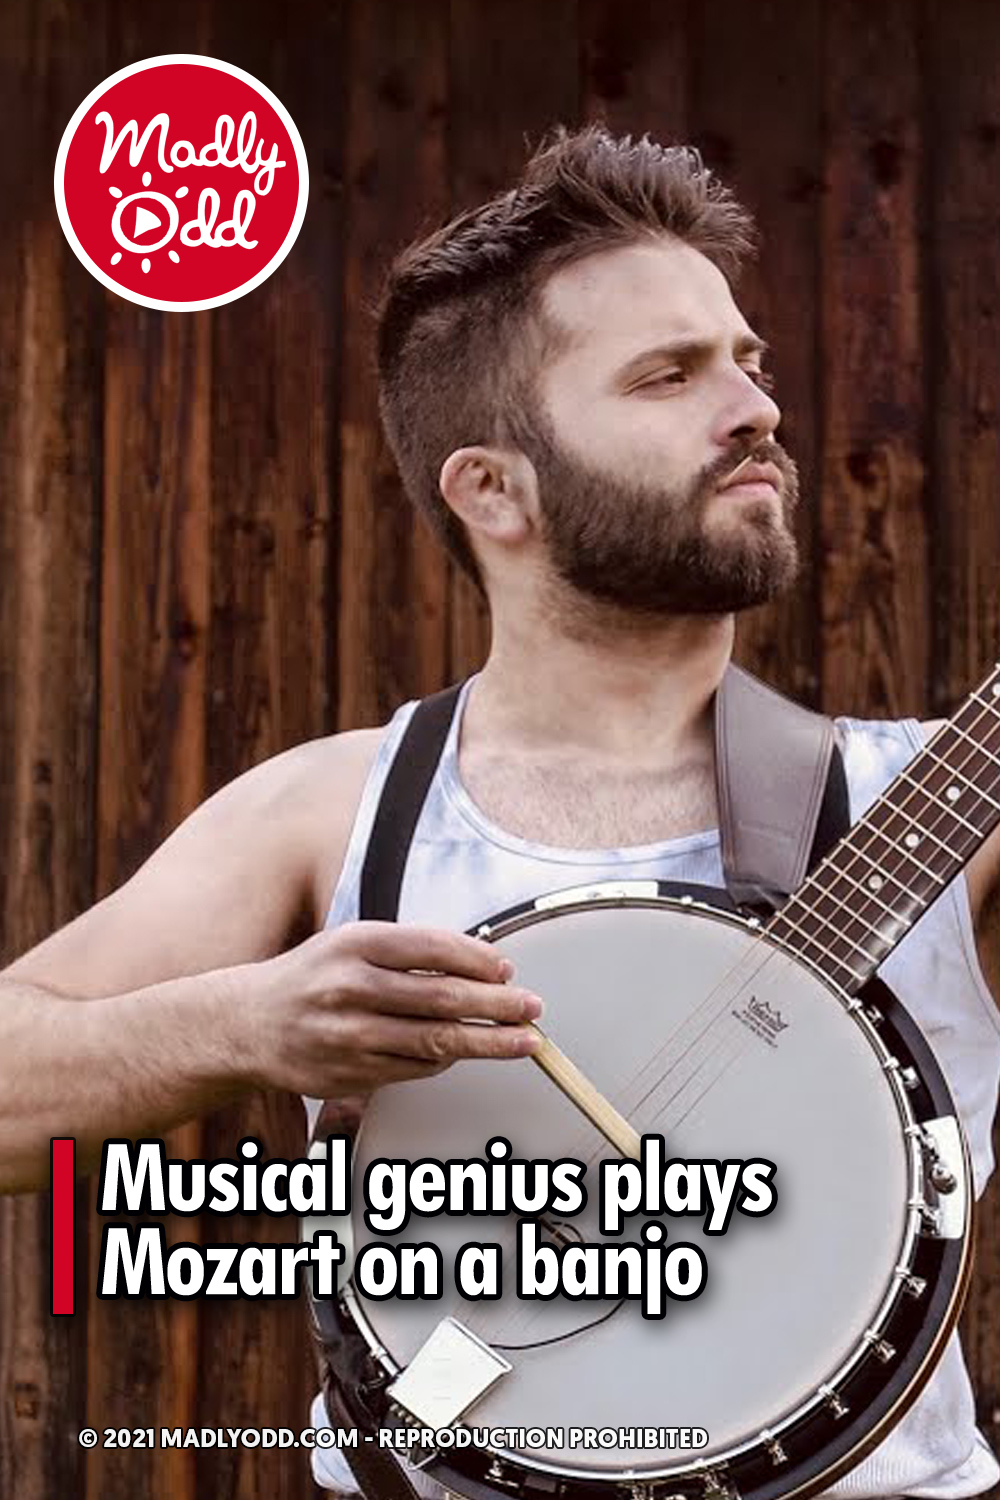 Musical genius plays Mozart on a banjo